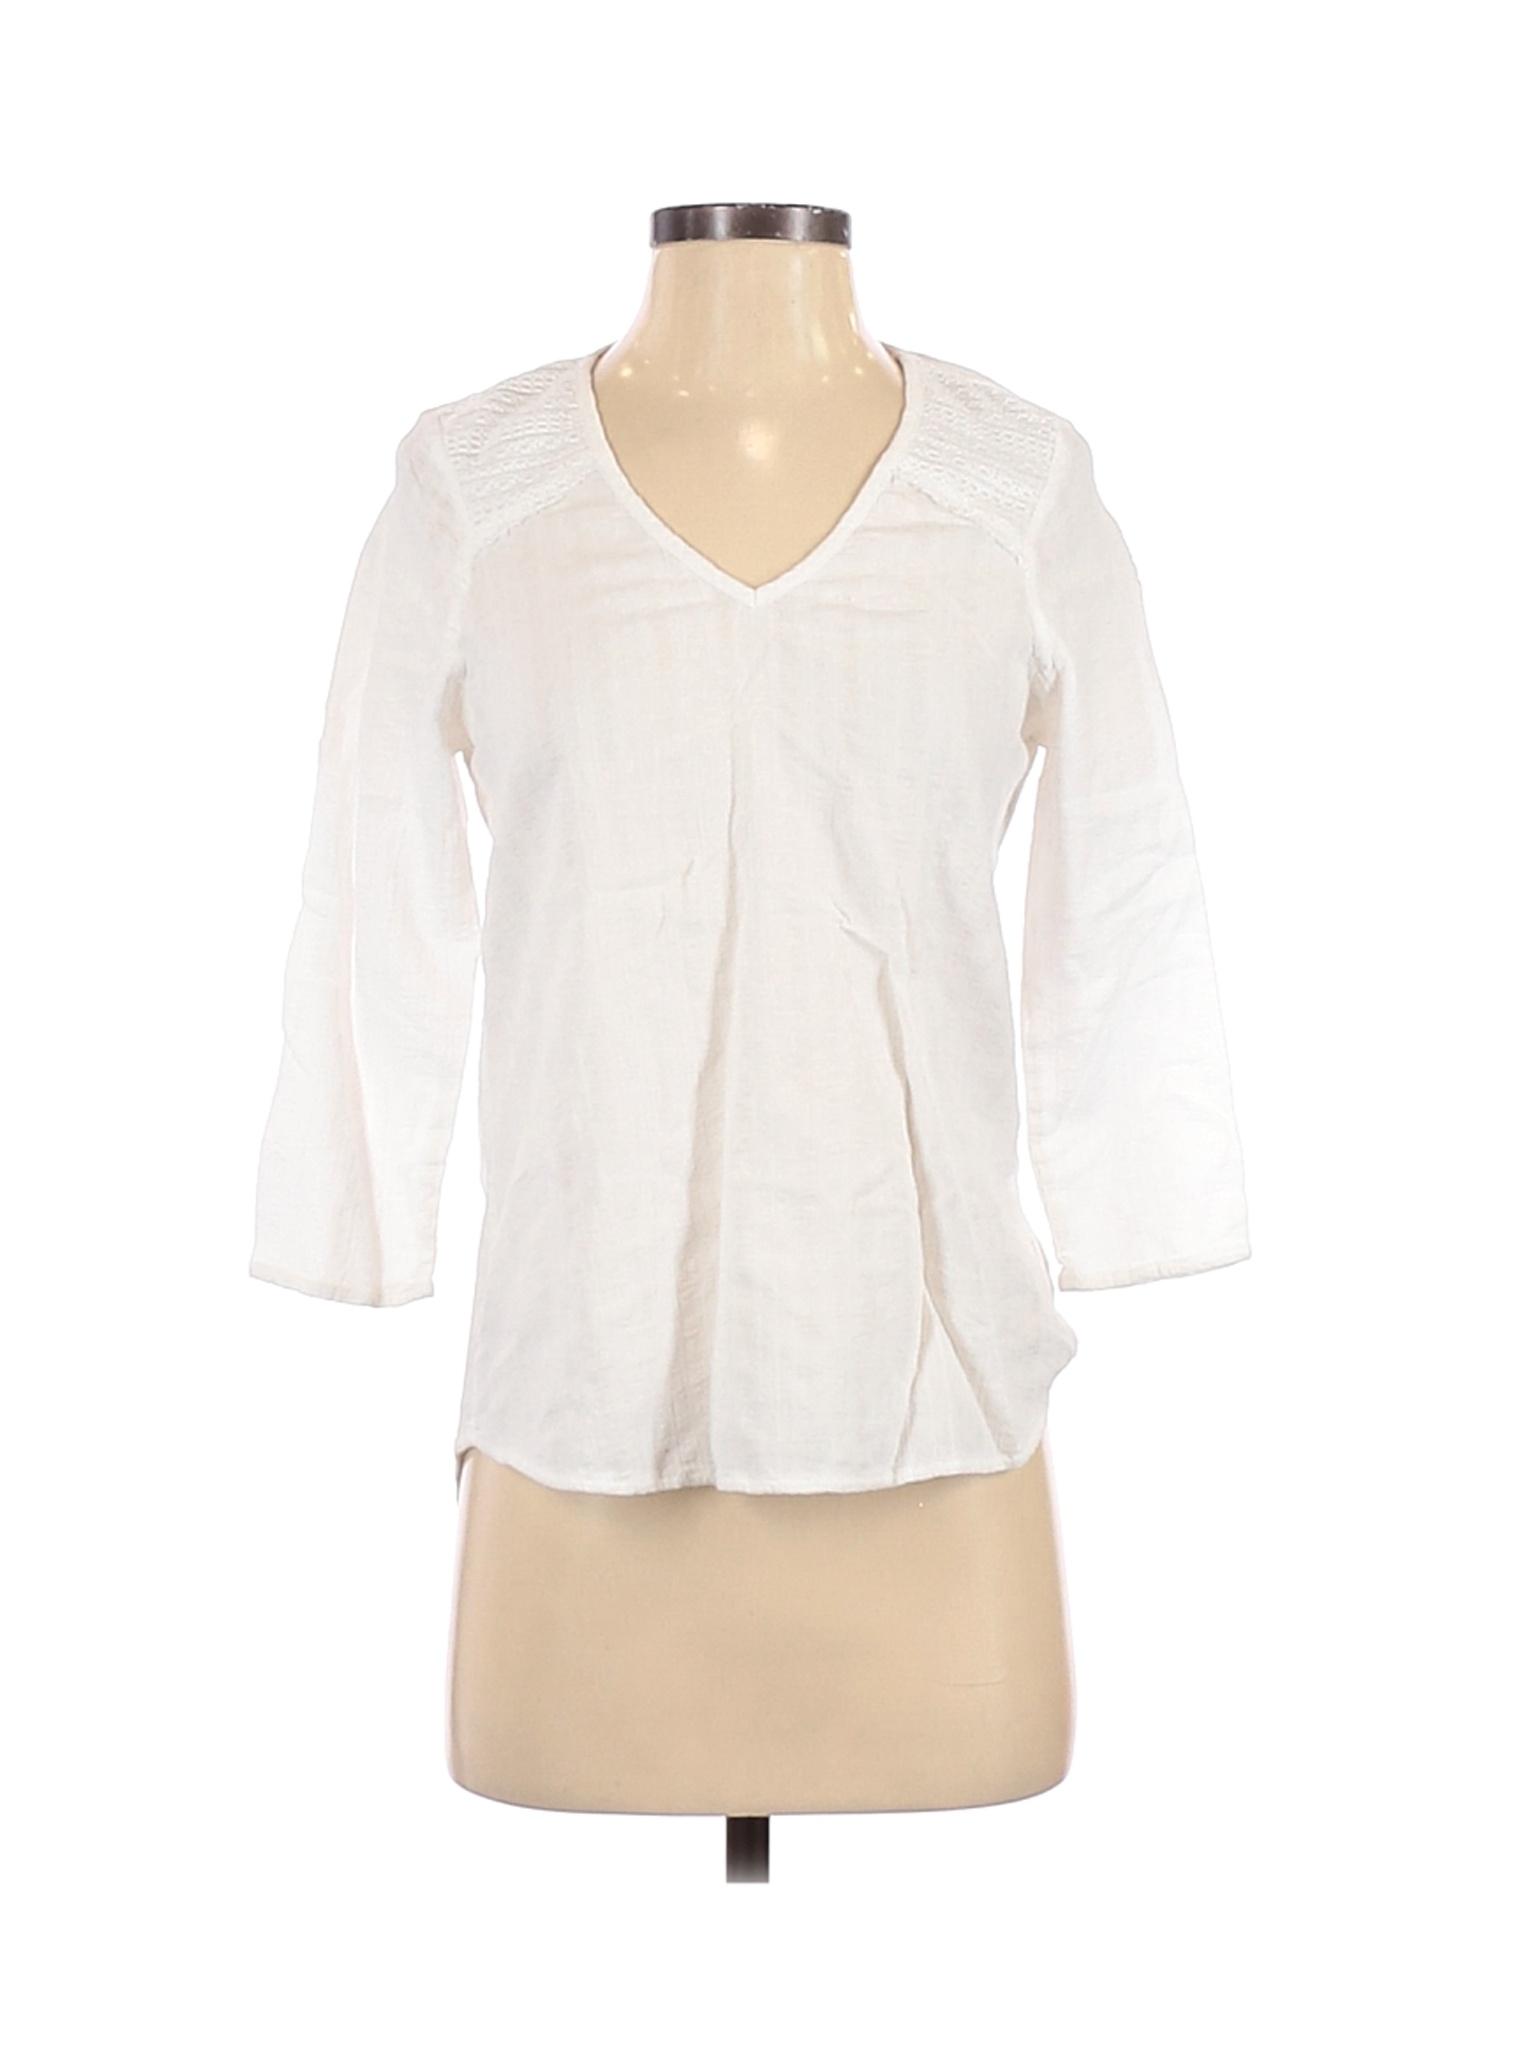 Universal Thread Women White Long Sleeve Blouse XS | eBay